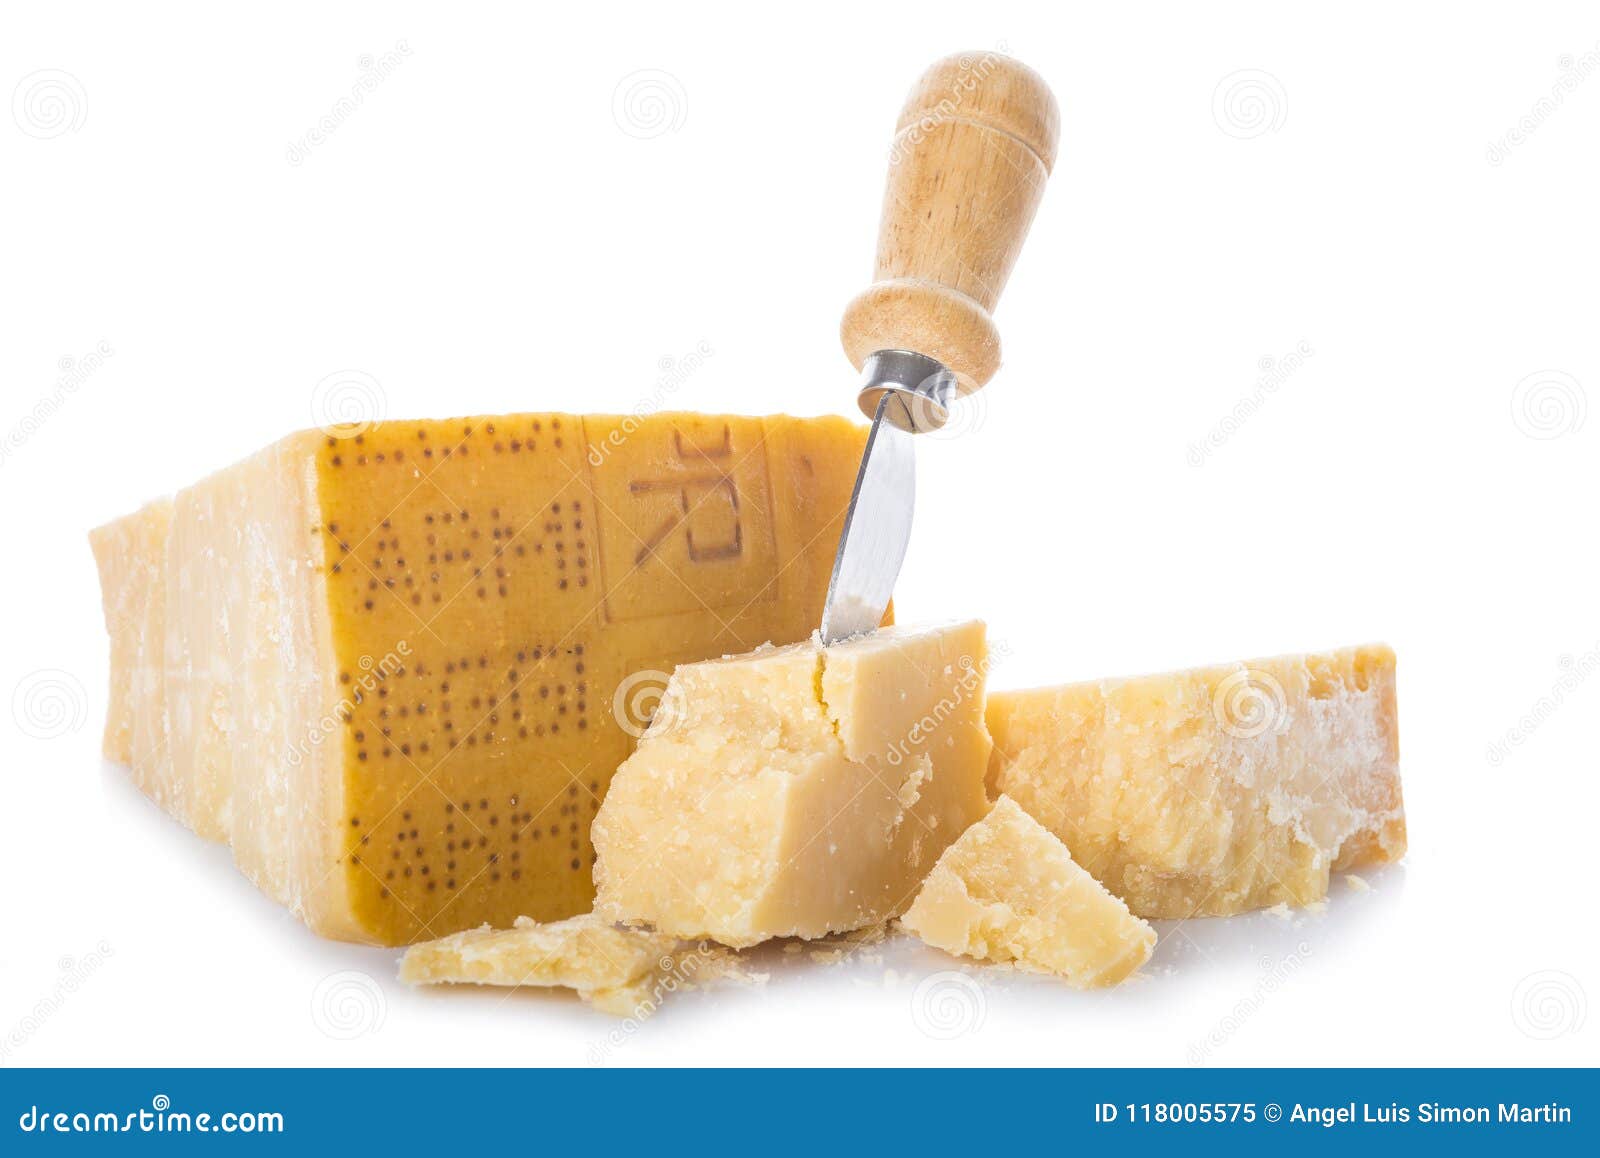 parmesan cheese or parmigiano reggiano  on white background